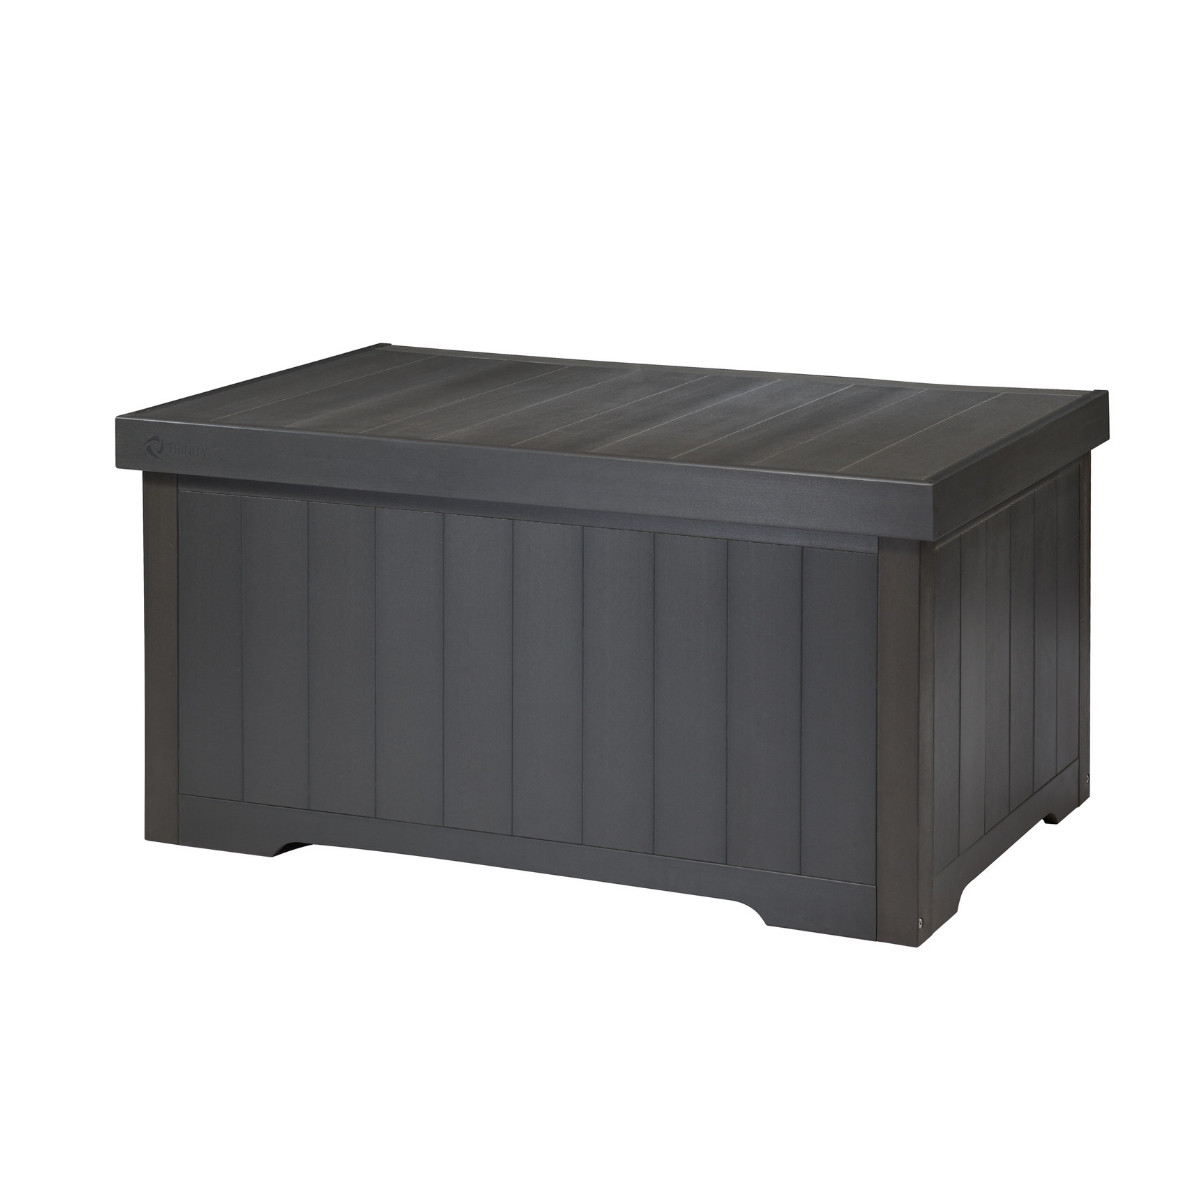 Thbgr-3108 70 Gal Ecostorage Outdoor Deck Box, Slate Gray - 21 X 42 X 26.5 In.